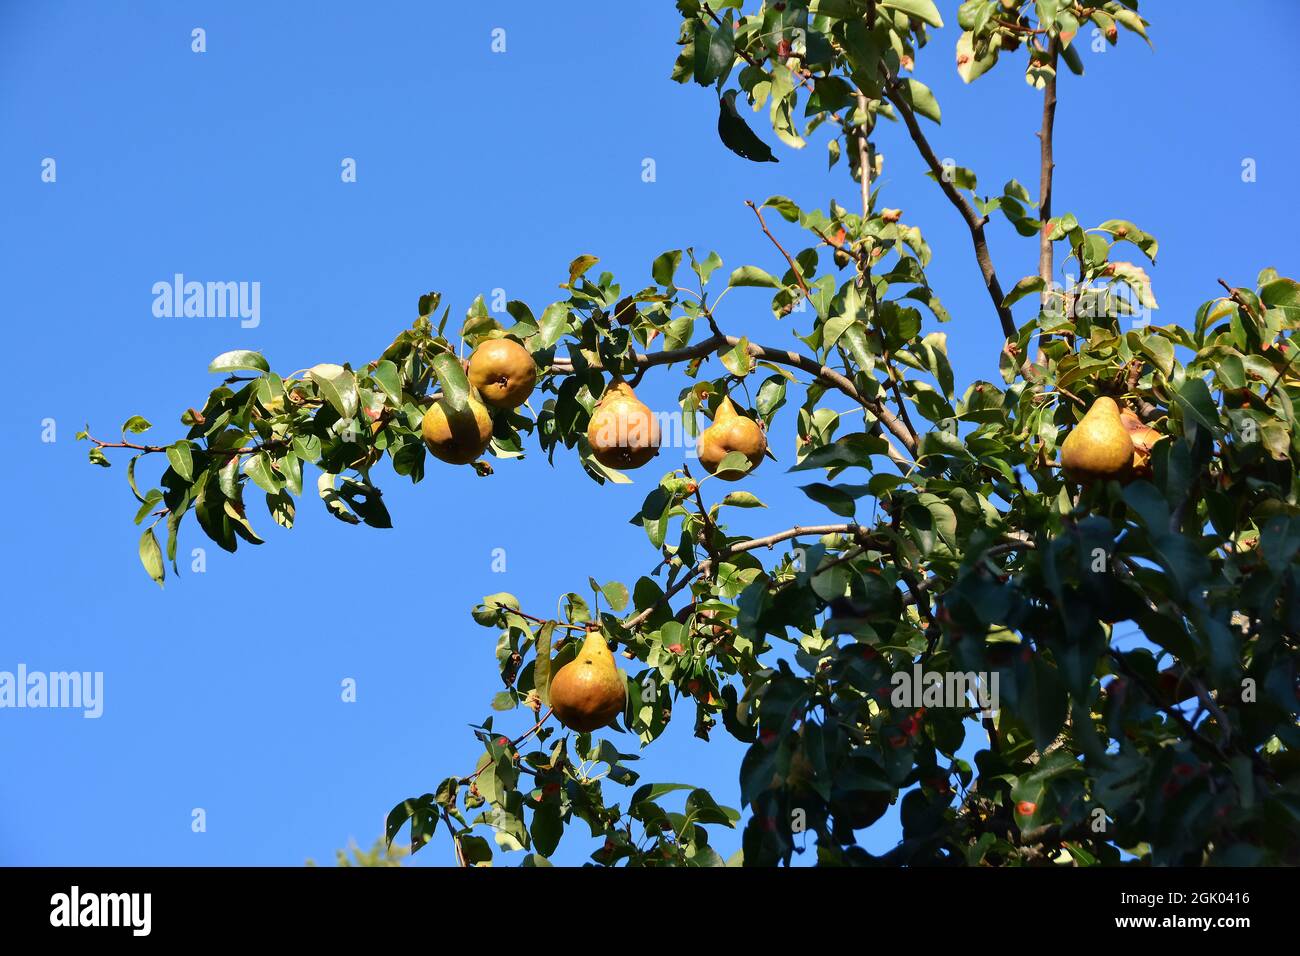 common pear, Kultur-Birne, Birnbaum, Pyrus communis, körte, Hungary, Magyarország, Europe Stock Photo